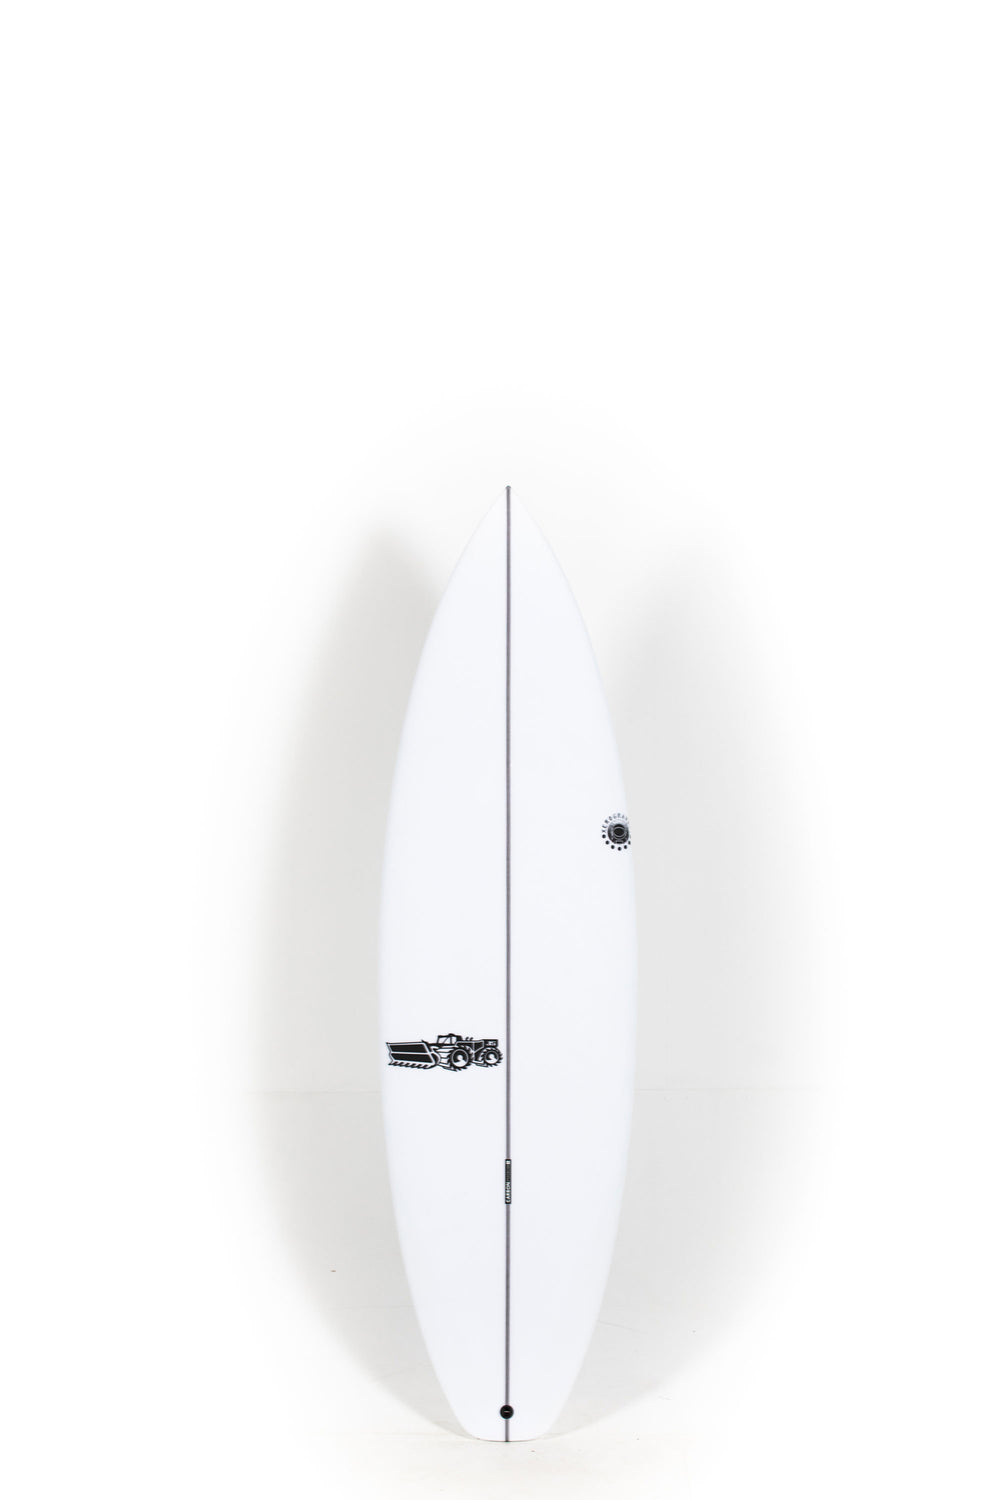 Pukas Surf Shop - JS Surfboards - XERO GRAVITY - 5'11